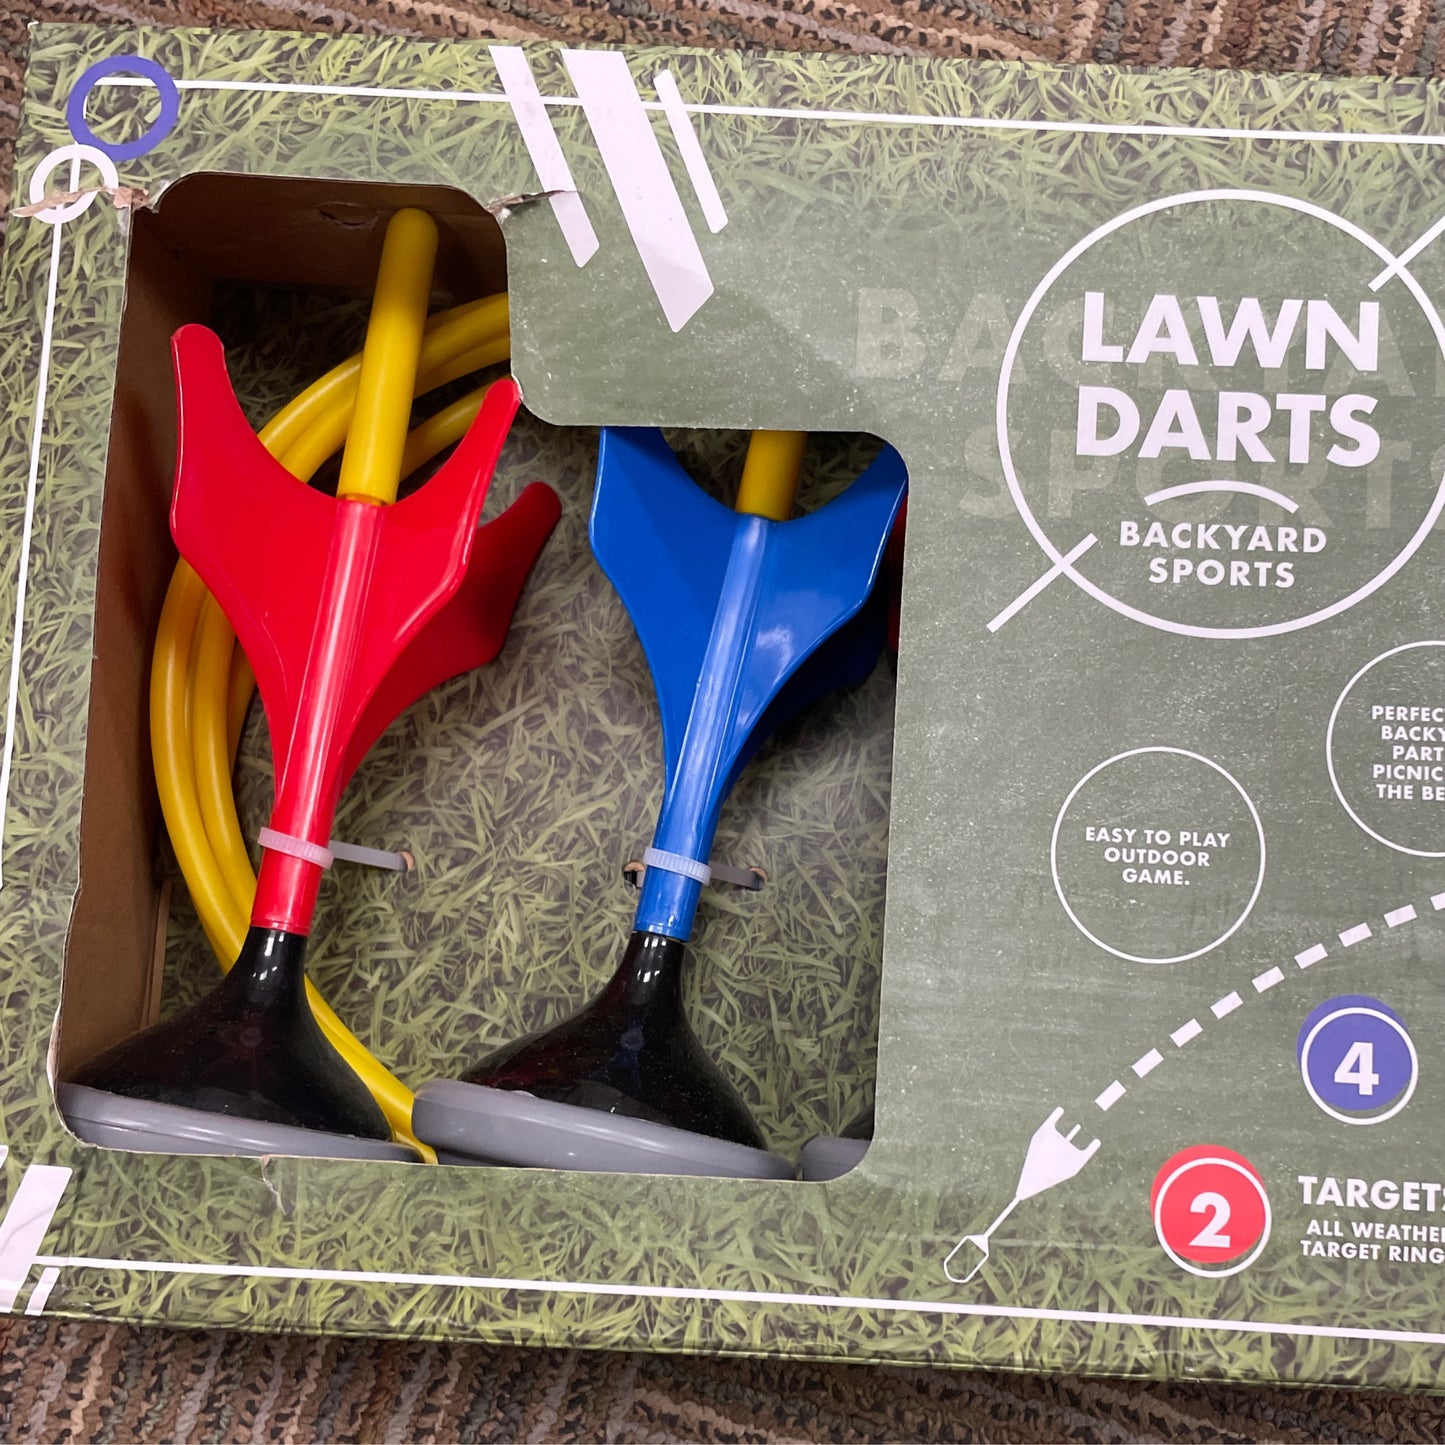 Lawn Darts by Backyard Sports